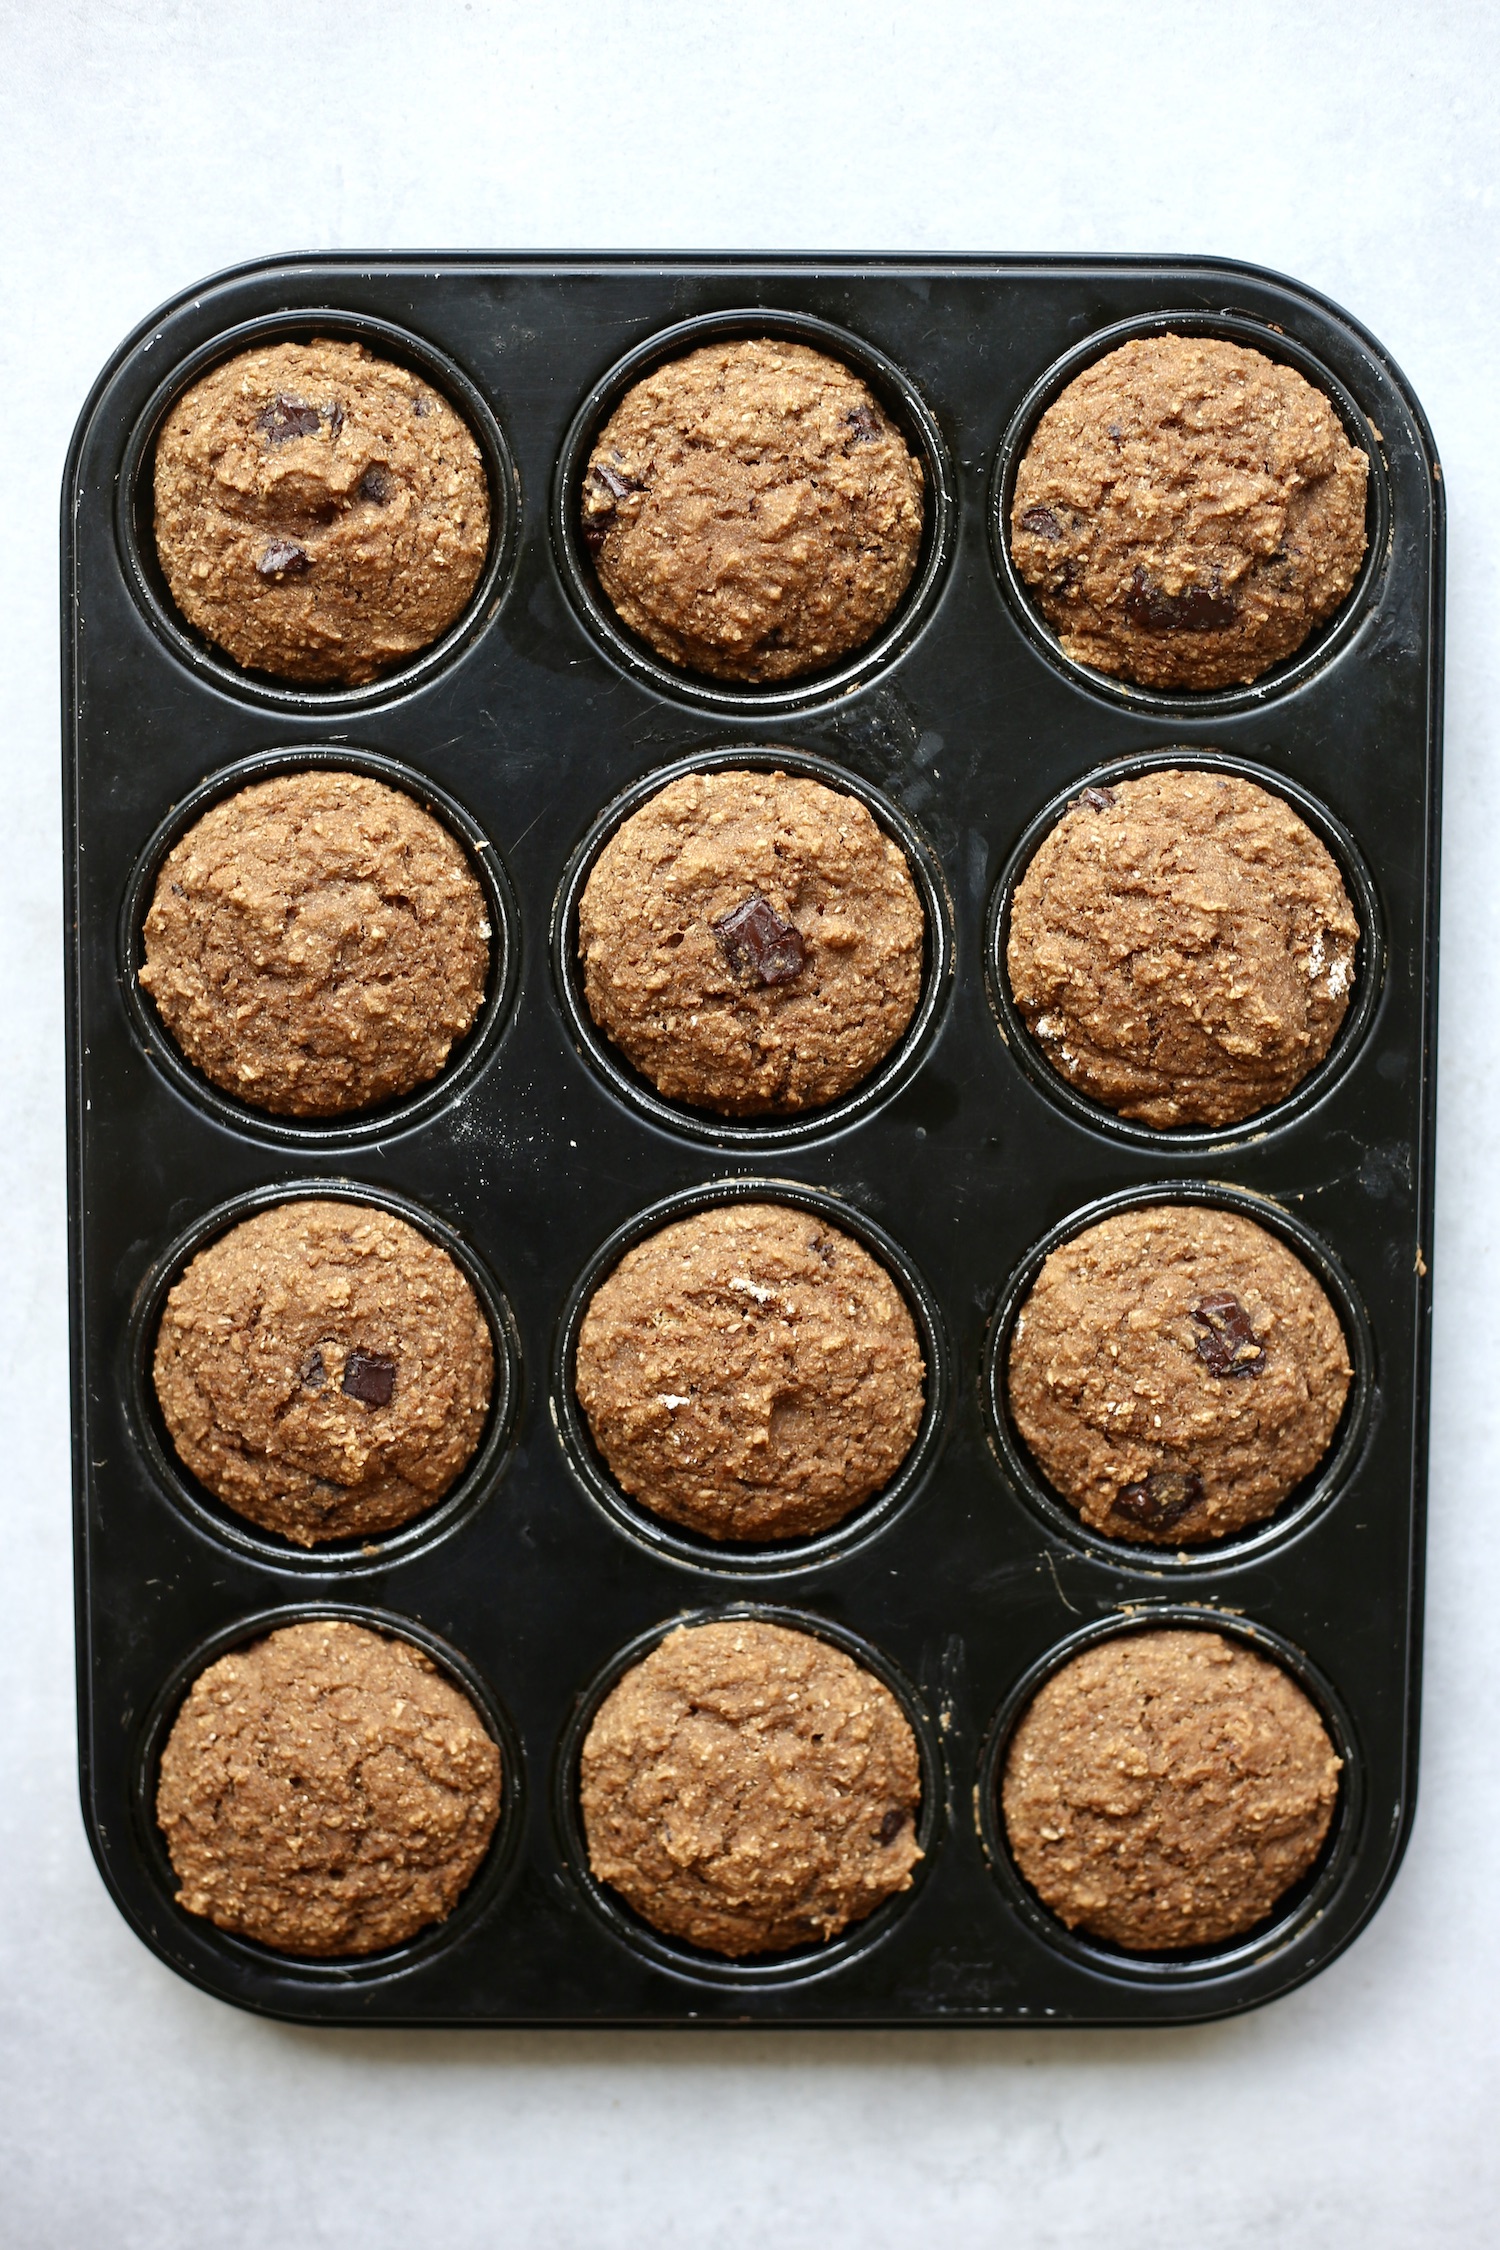 12 Vegan oat bran muffins baked in a black muffin pan. 